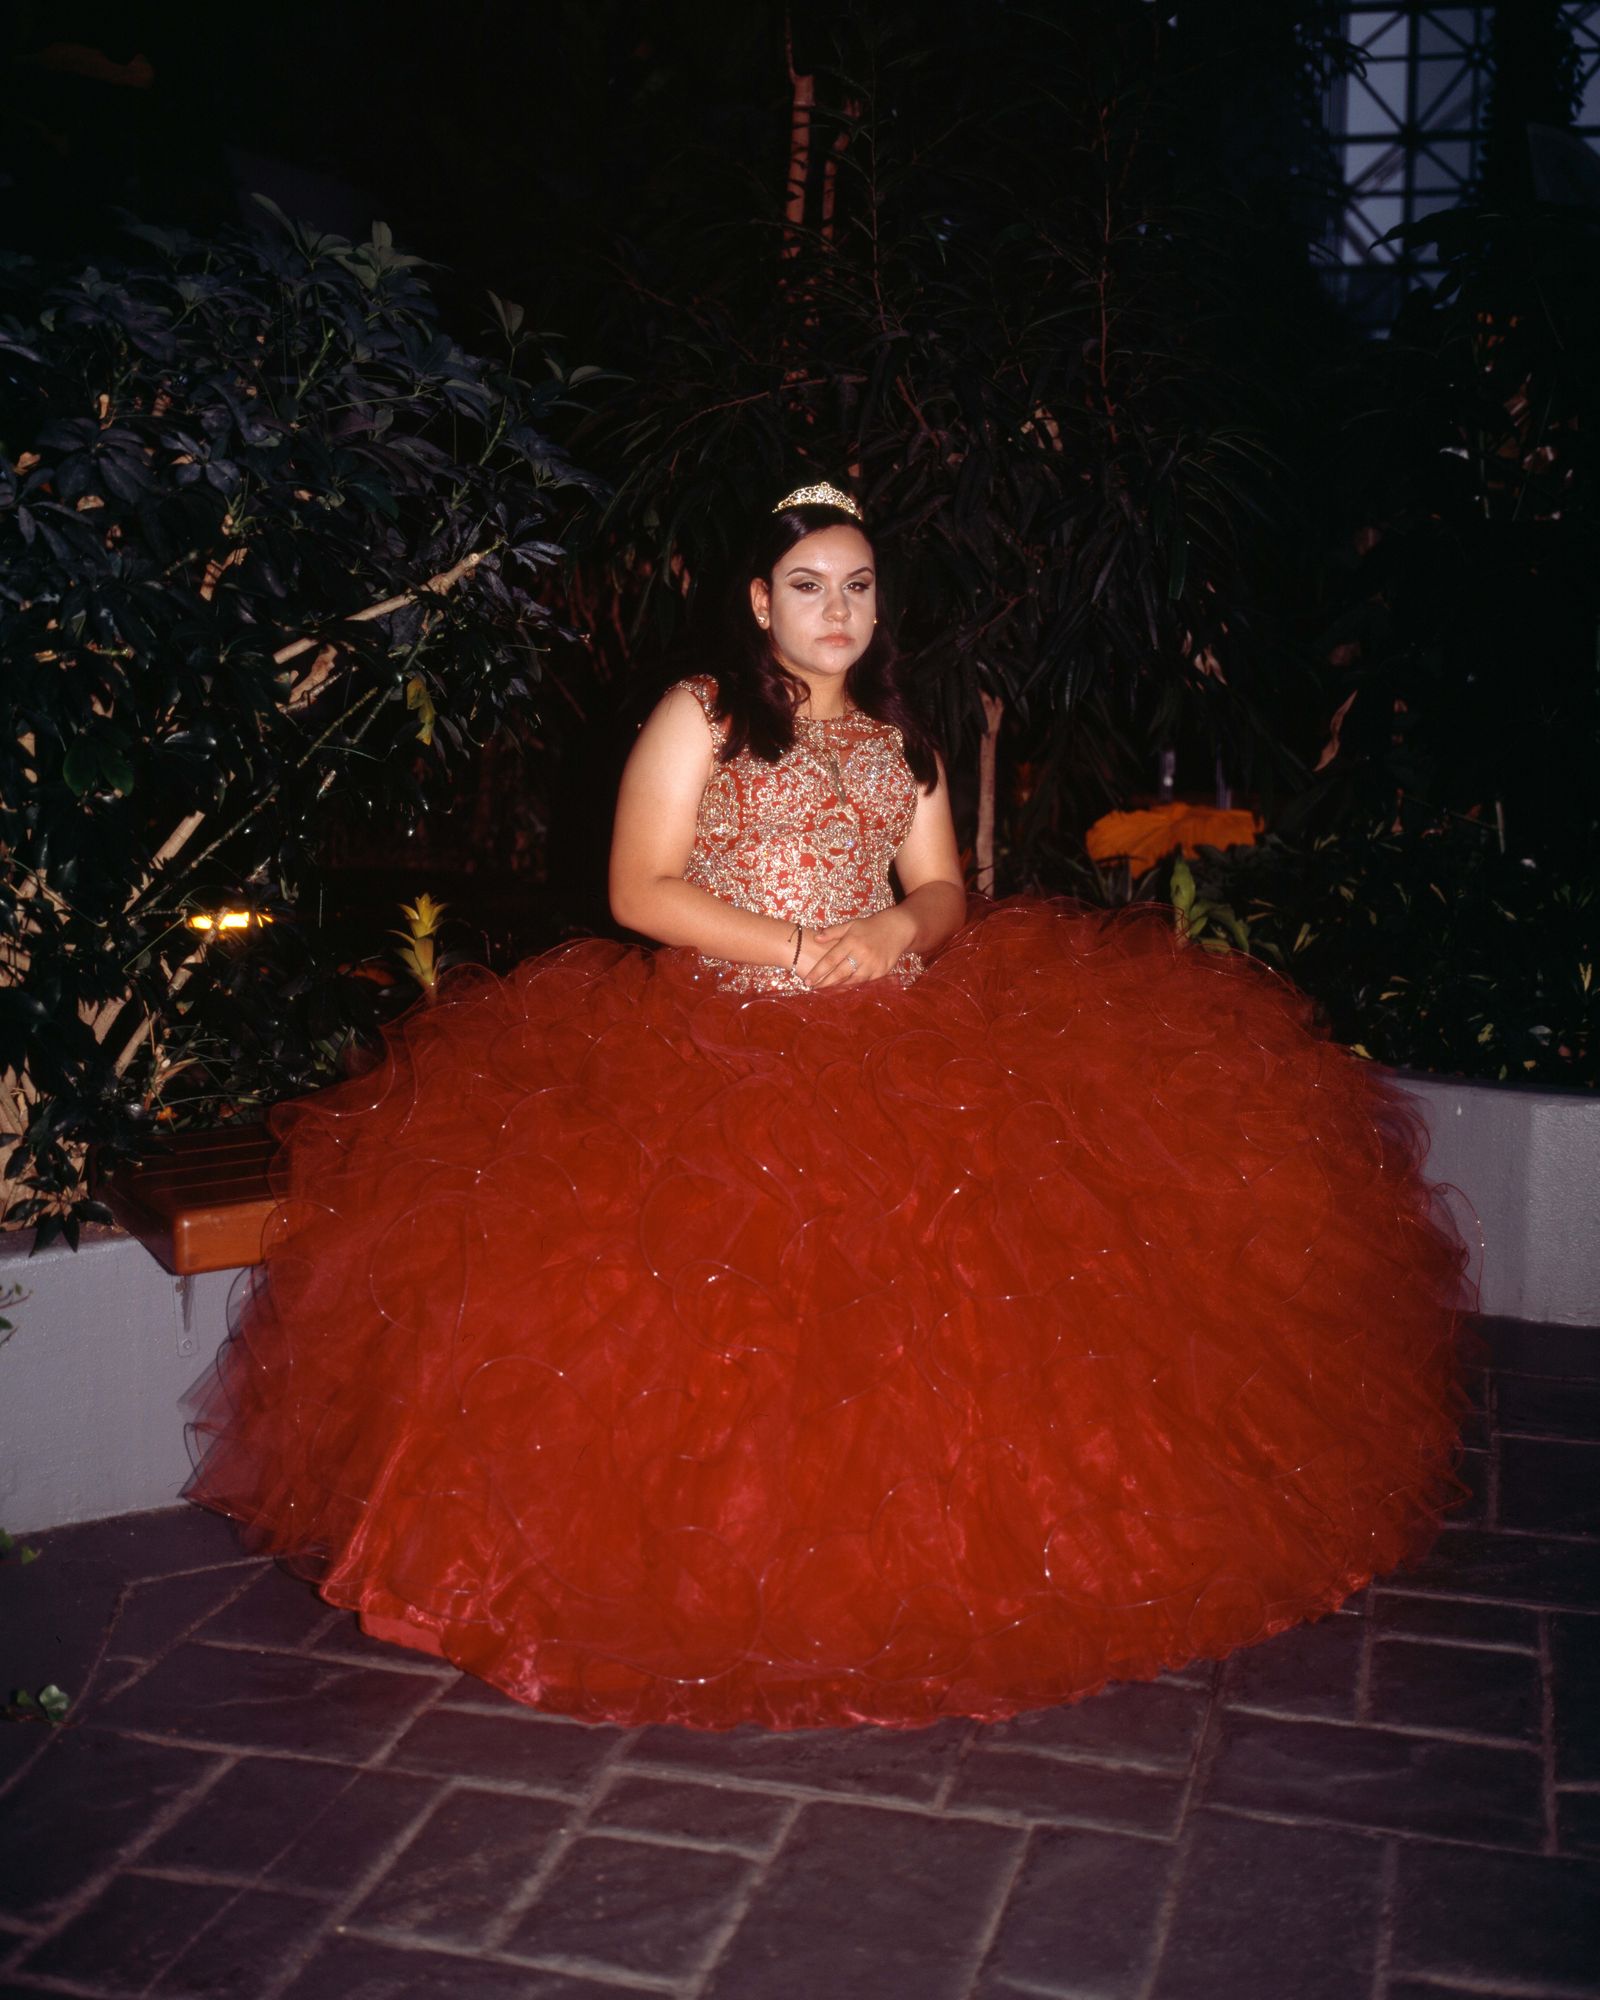 © Samantha Cabrera Friend - Quinceañera in an "untraditional" dress poses beside an indoor garden.